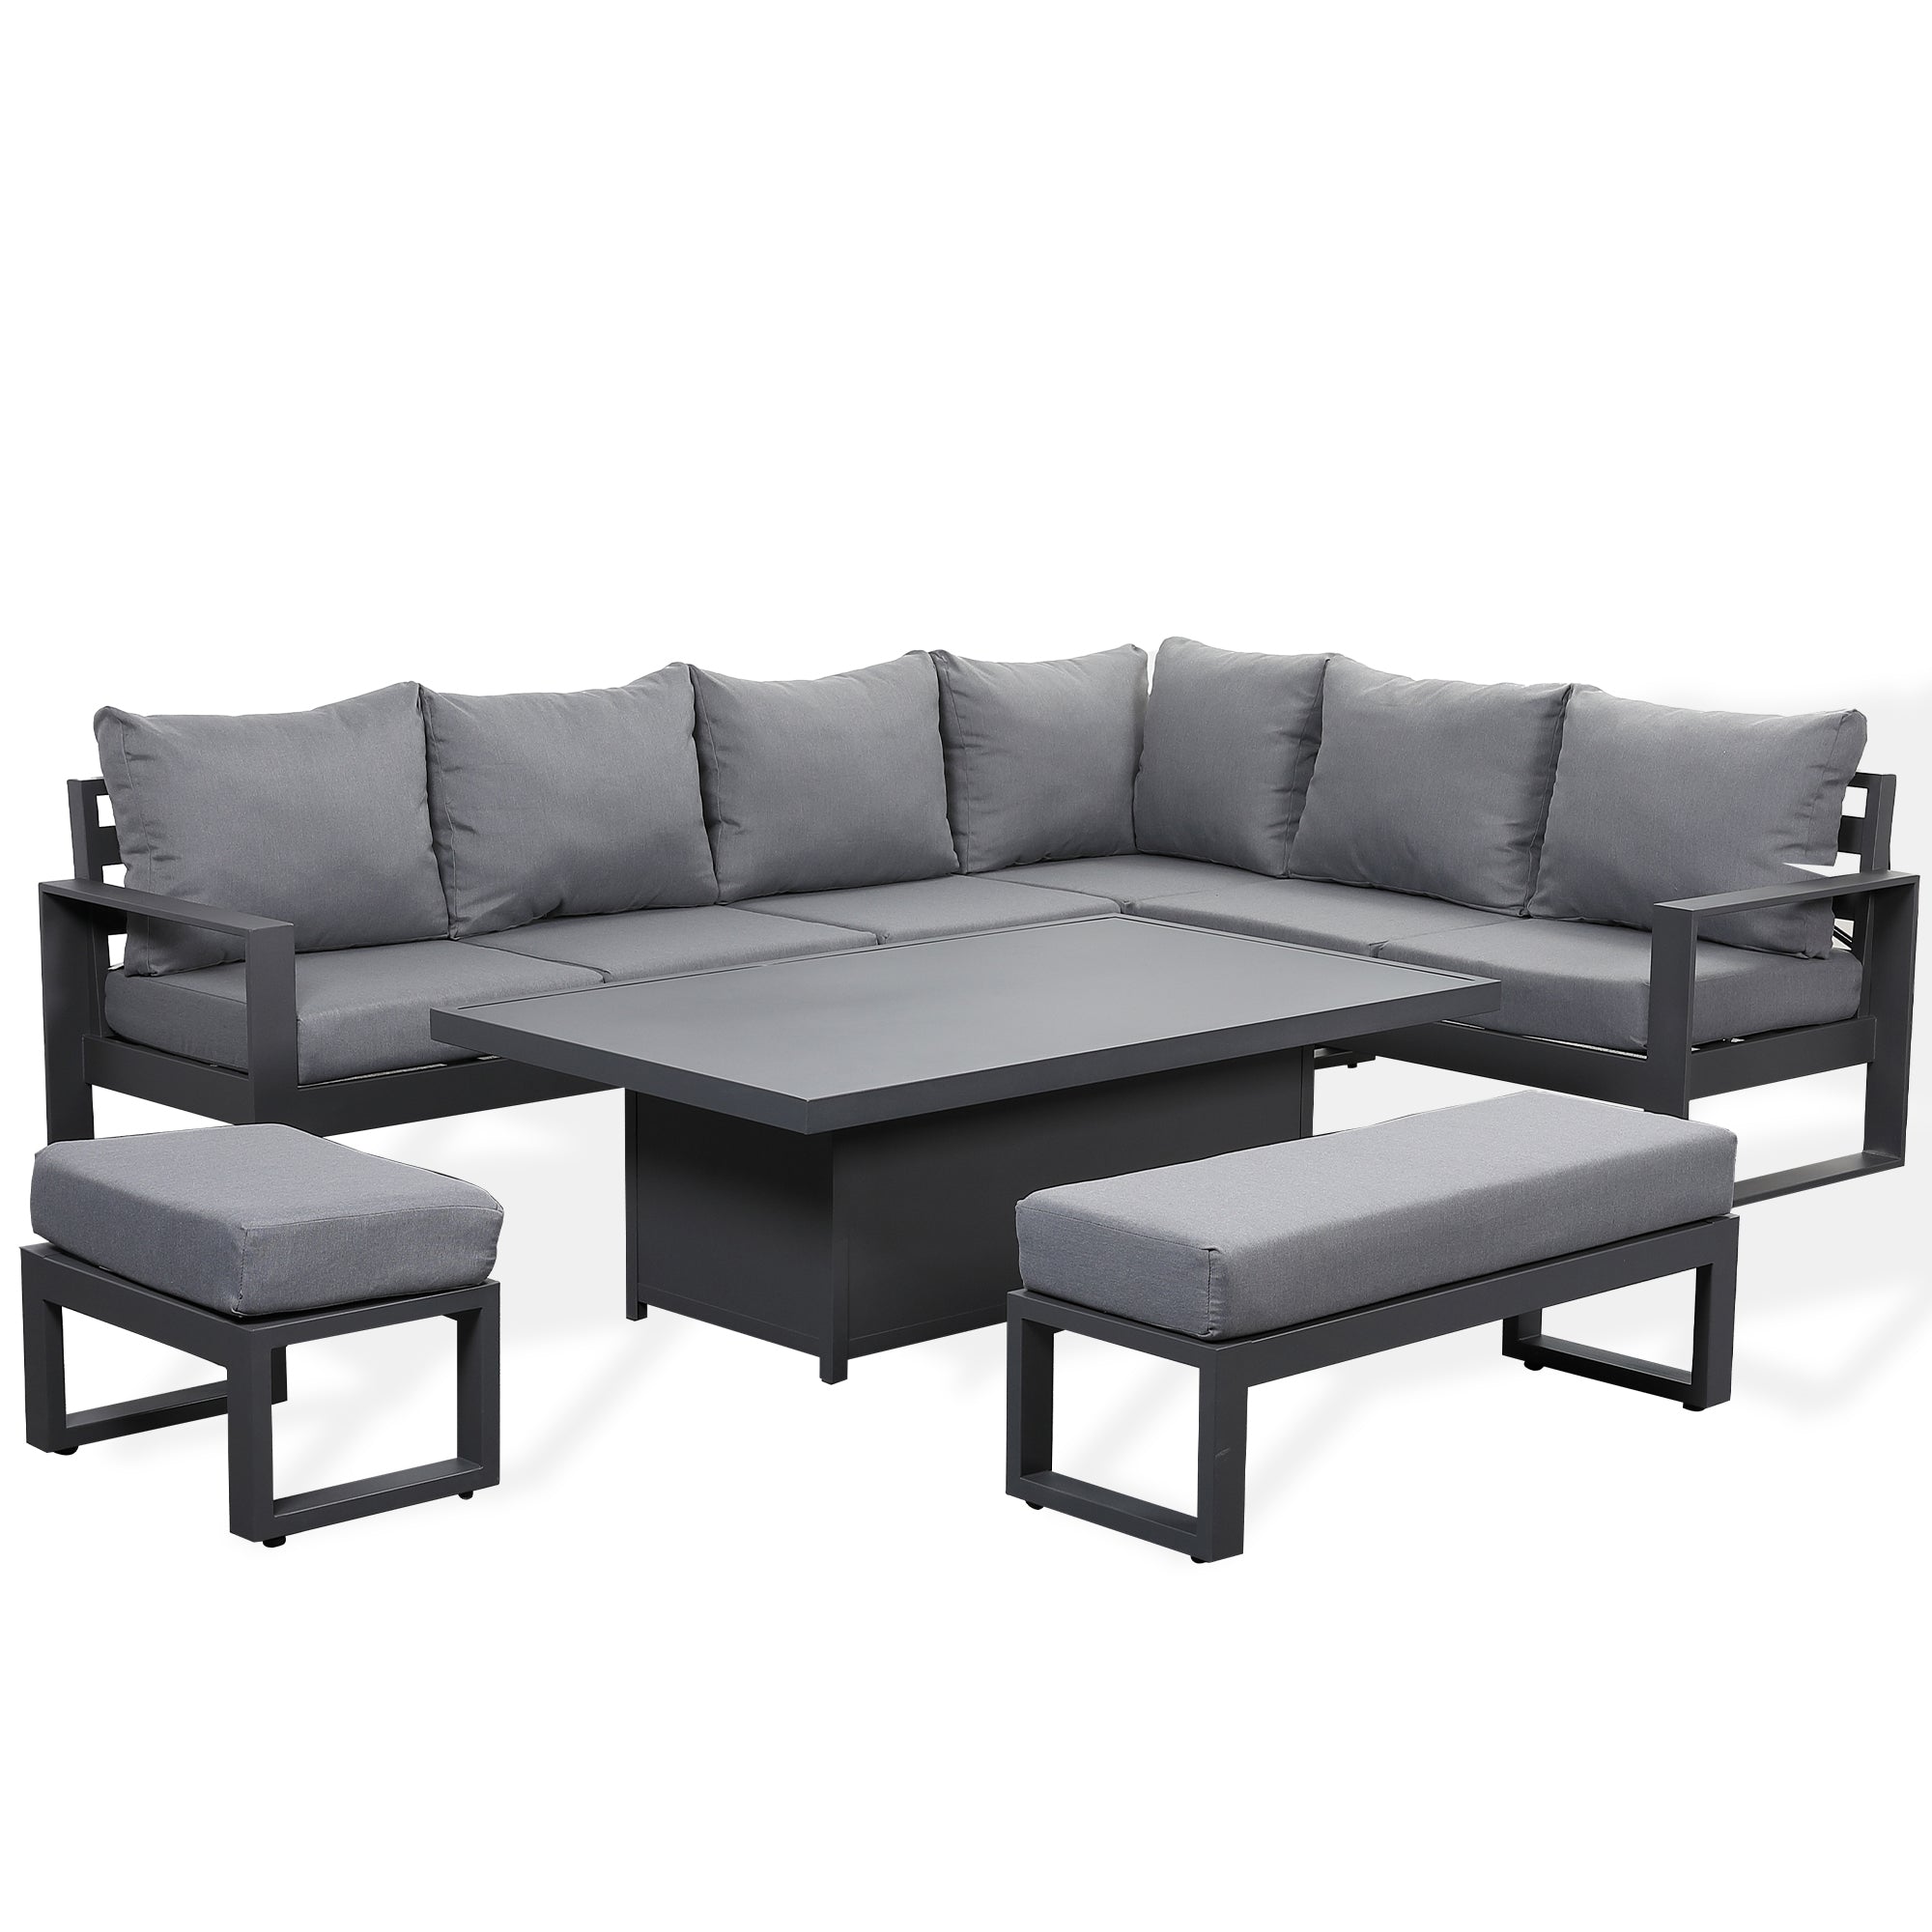 HL02 Halo Range Right Hand Corner Sofa Set - Charcoal Aluminium Frame with Grey cushions